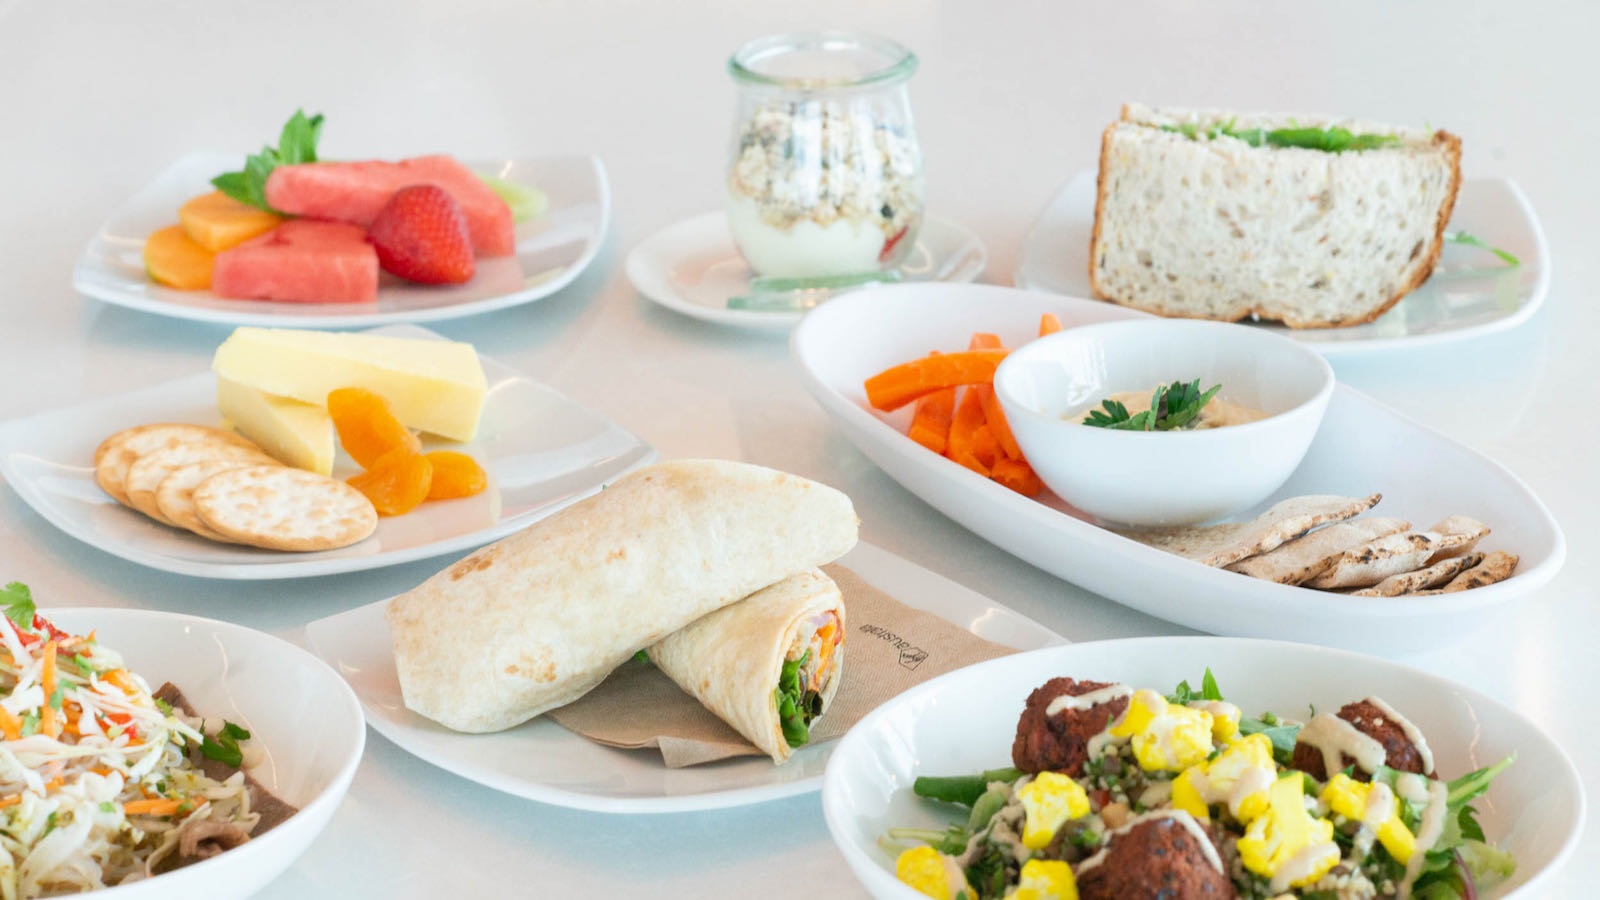 Virgin Australia Adelaide Lounge enhanced menu offering highlight dishes